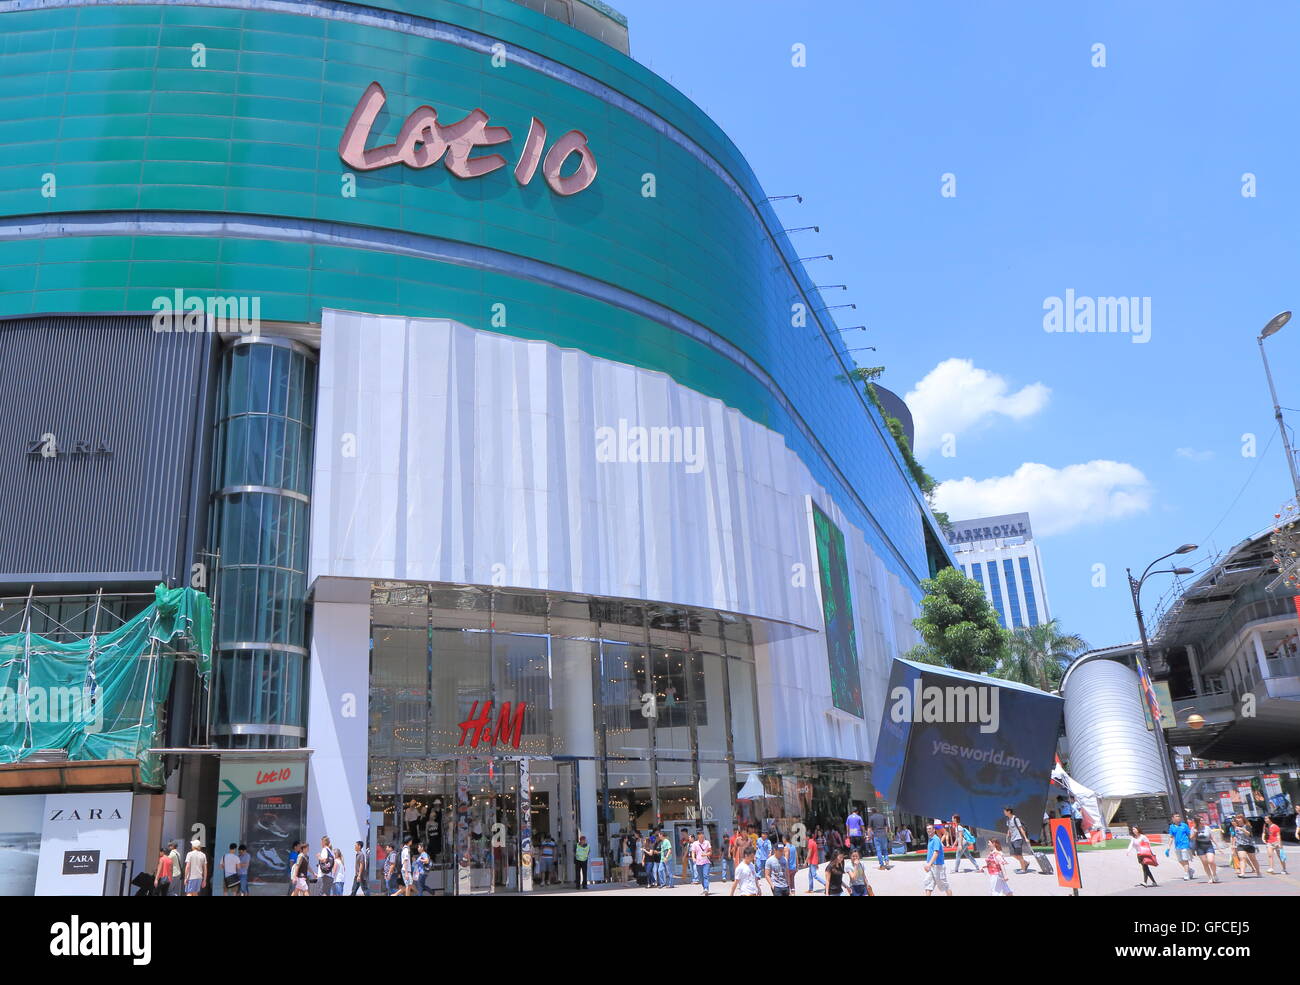 Lot 10 Shopping Mall in Kuala Lumpur Malaysia Stock Photo - Alamy